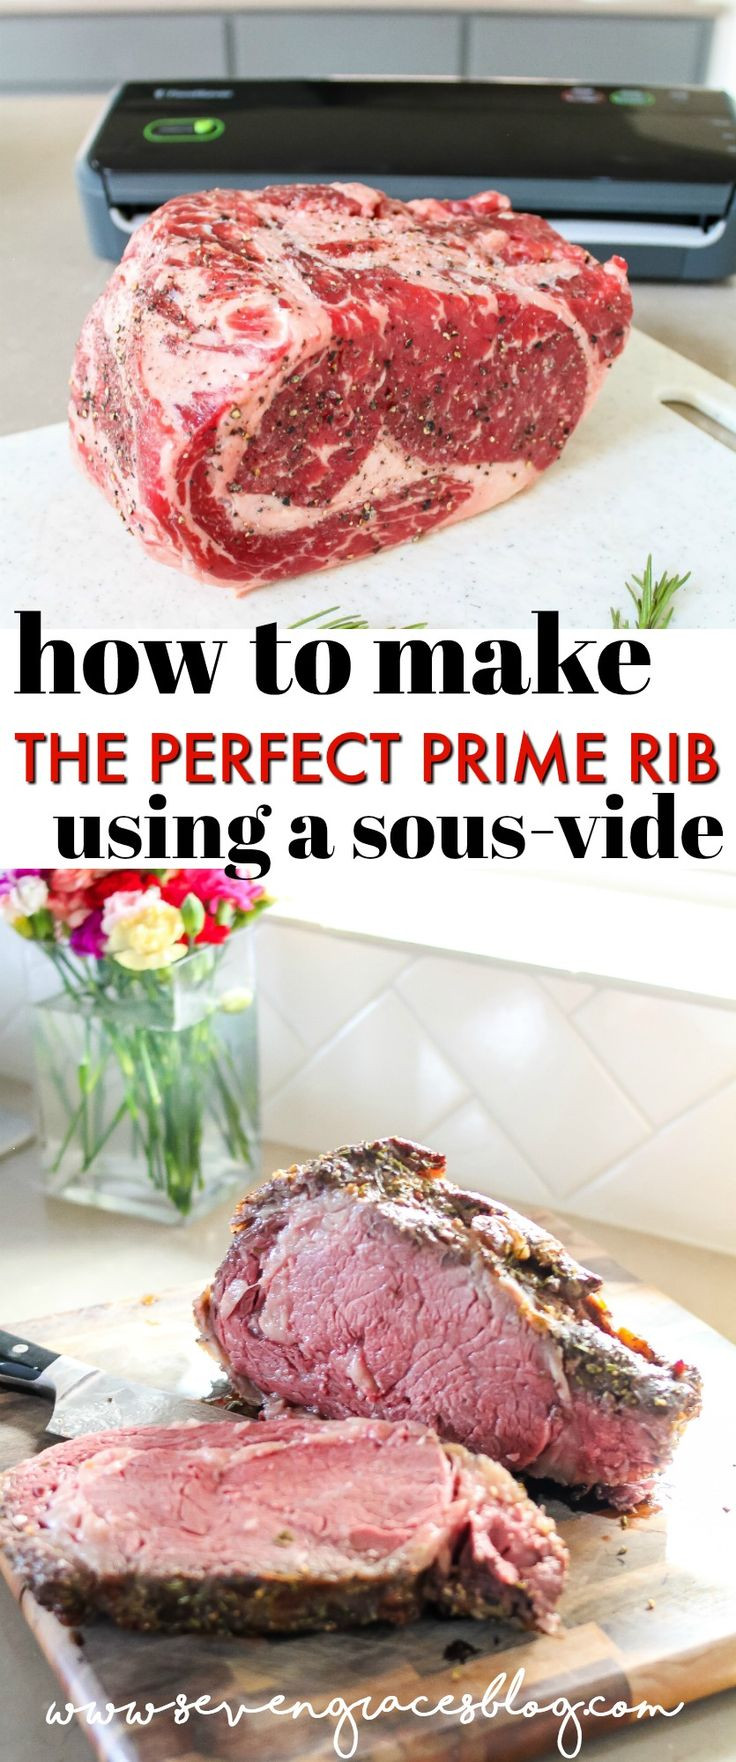 Prime Rib Roast Sous Vide
 How to Make the Perfect Prime Rib Using a Sous Vide